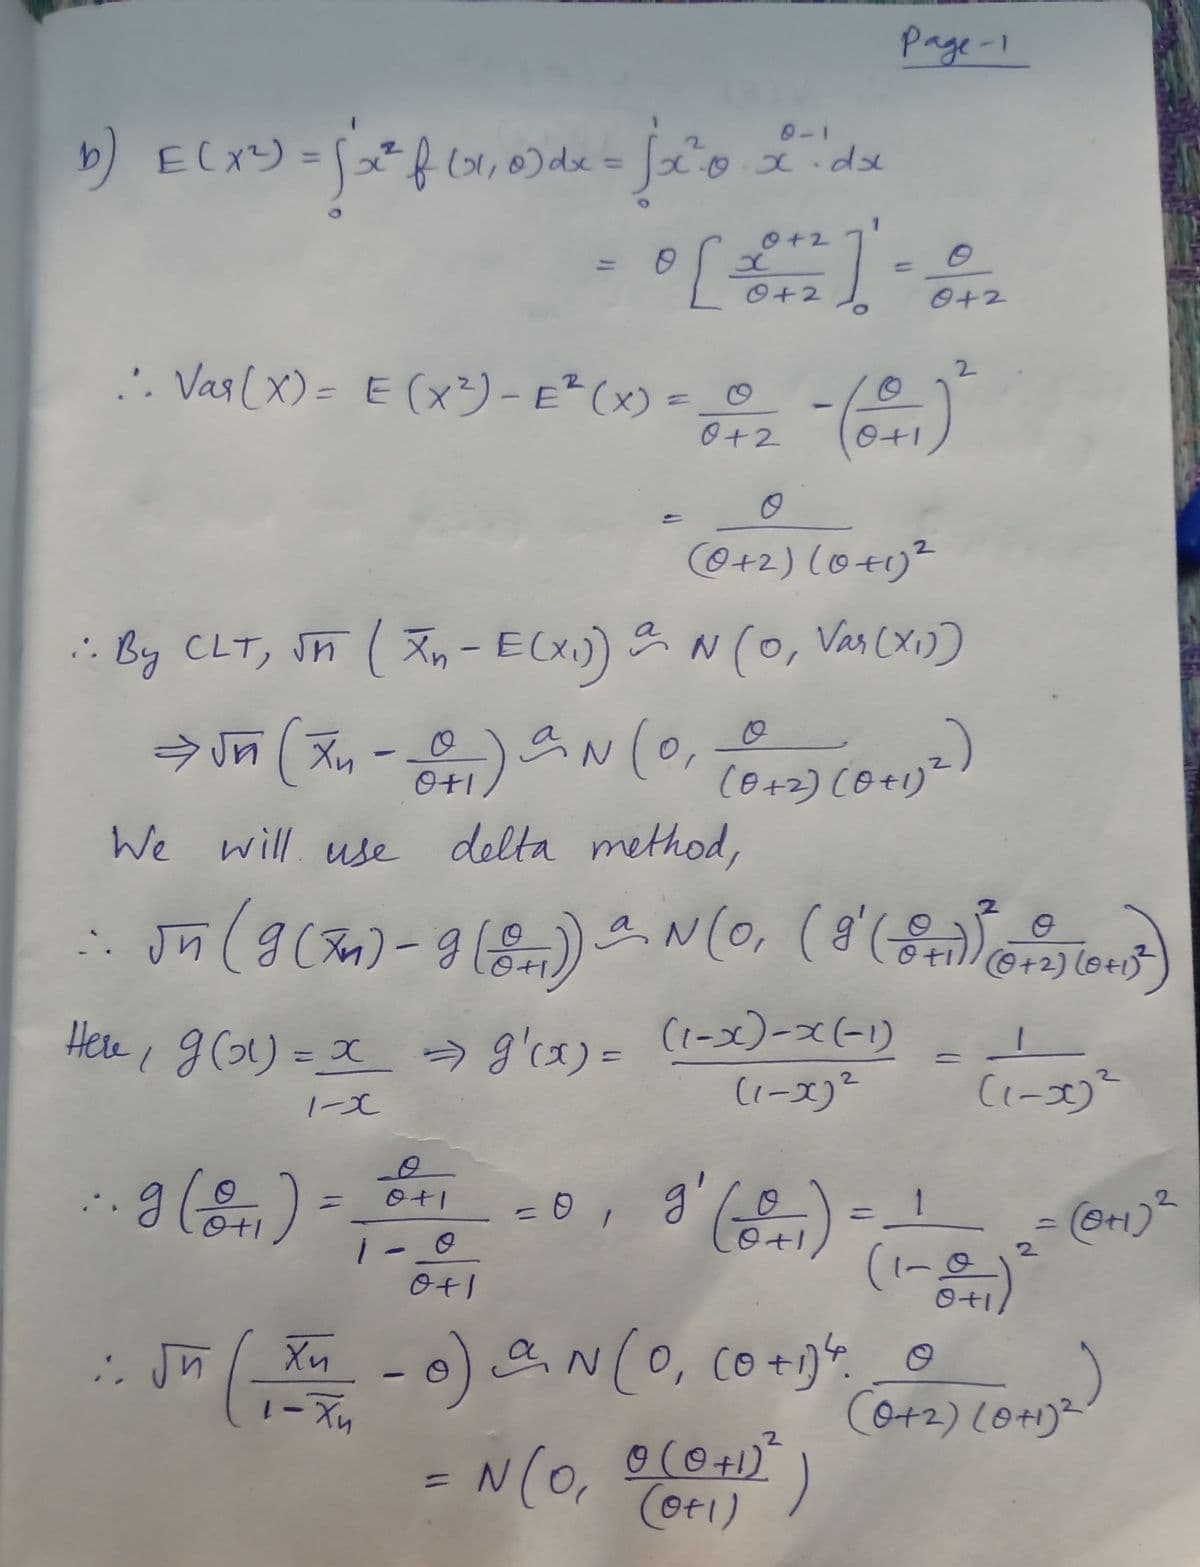 Page-1
0-1
) ECx)
%3D
%3D
1.
0+2
%3D
O+2
0+2
.'. Vas (x) = E (x³) - E²(x) = _©
2.
0+2
(0+2)(0+1)²
: By CLT, Sn (T, - E(x)N (0, Vancxi)
Vas (Xi))
:-
()
(0+2) CO+1)
We will. use delta method,
N(0, (8'
0+2) (o+1
→ 9'a) = (1-x)-x(-1)
(1-x)²
Hele, g o) = x
g'cx)3=
13D
2
2.
1
11
1-0
Xu
Co ti)
CO+2) (0+1)²
|
© (©+1)
=N(0, 0(0+)*)
Cot1)
%D
